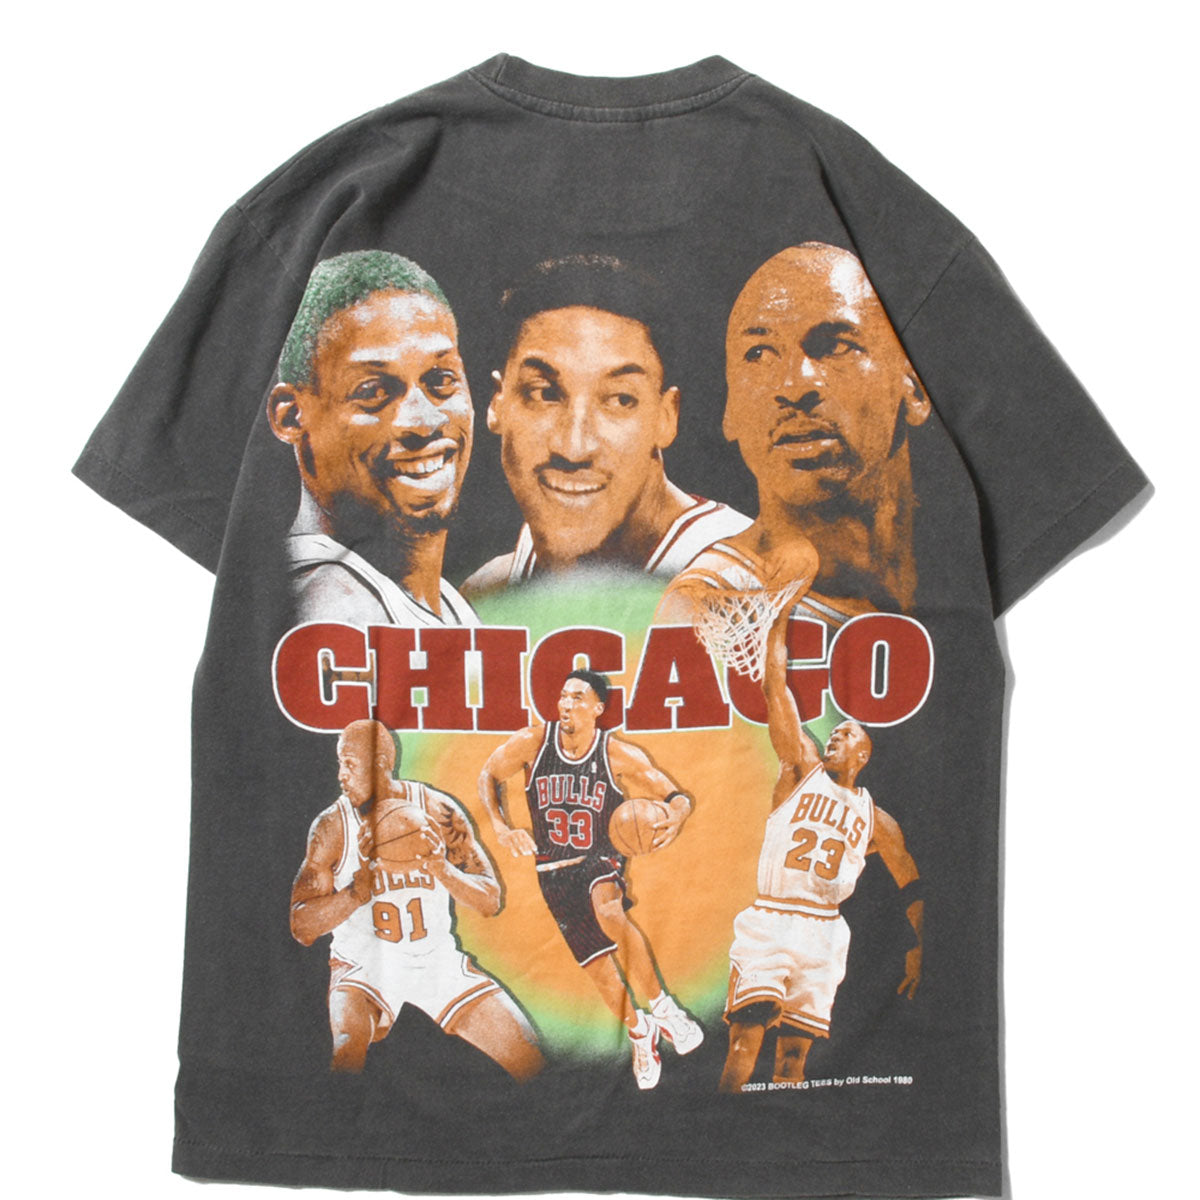 CHICAGO BULLS TEE 半袖Tシャツ AT-018